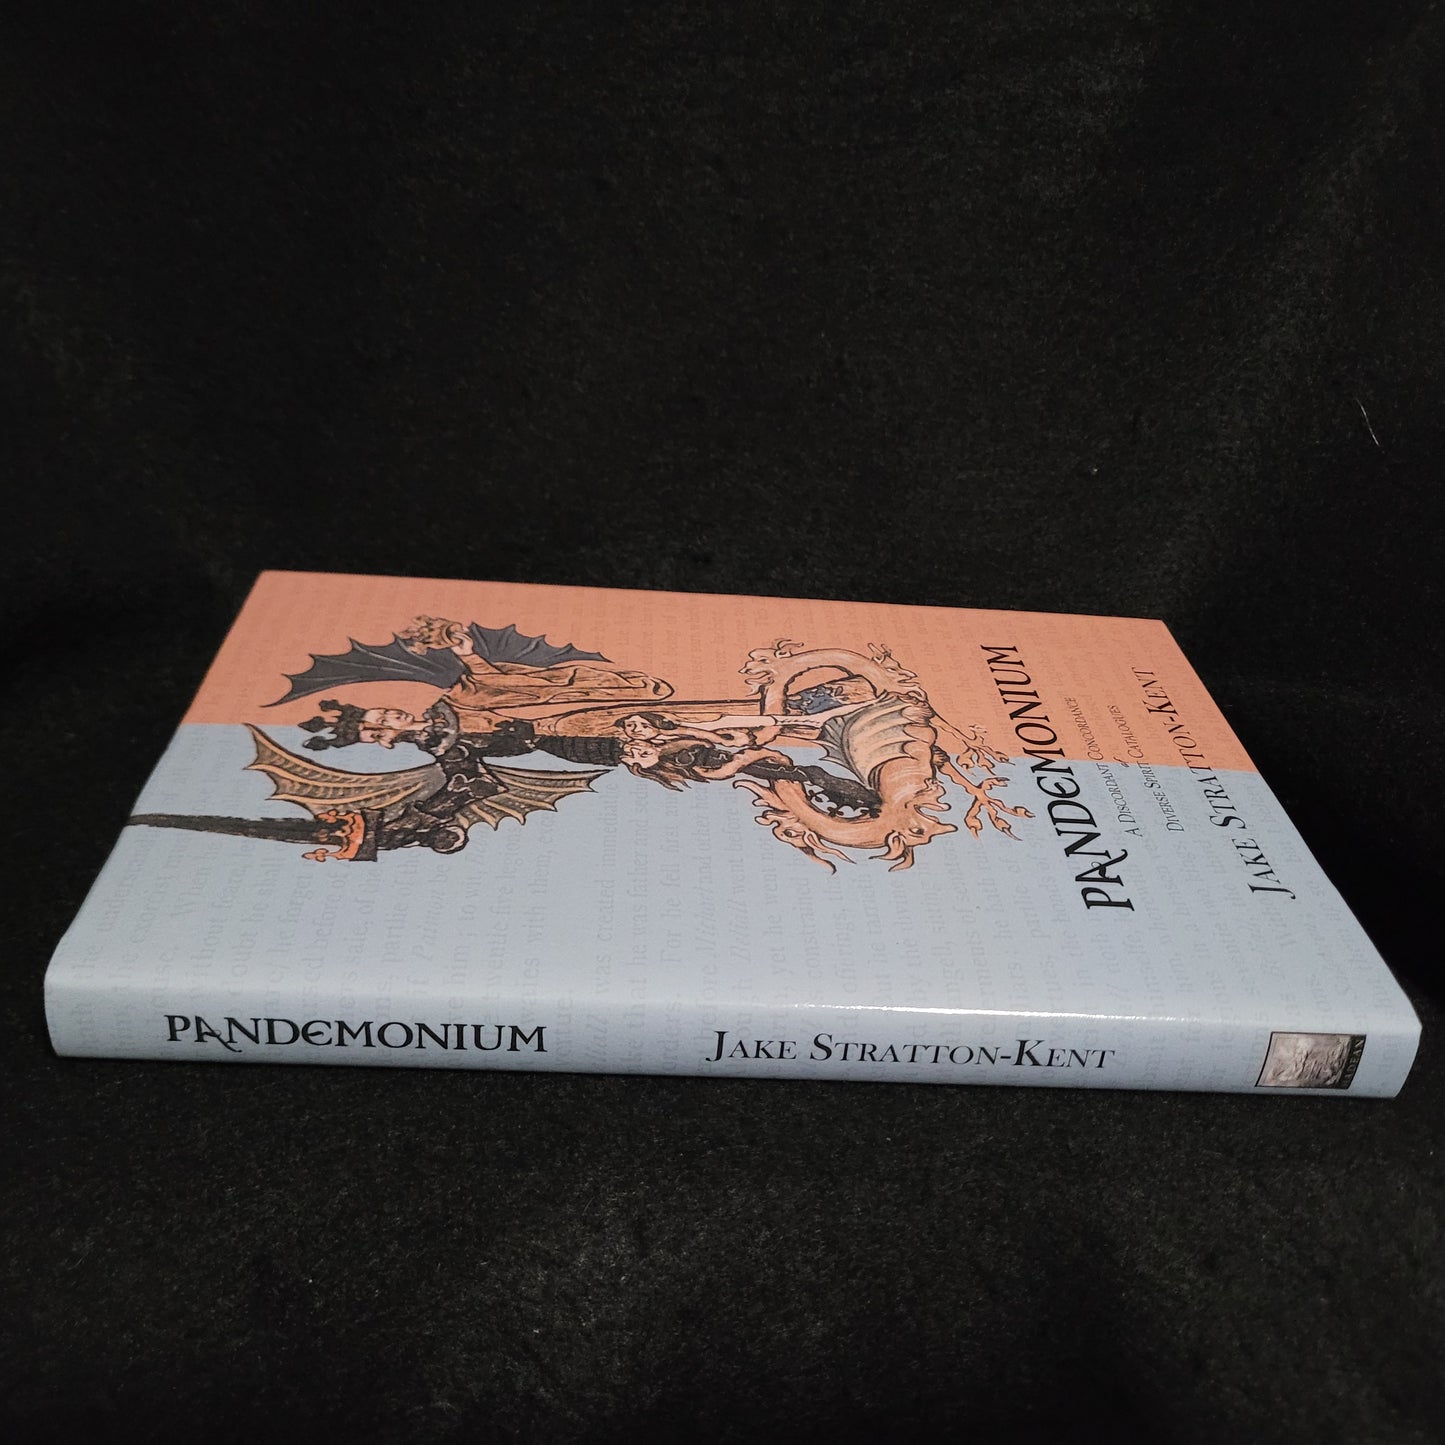 Pandemonium: A Discordant Concordance of Diverse Spirit Catalogues by Jake Stratton-Kent (Hadean Press, 2016) Hardcover Edition